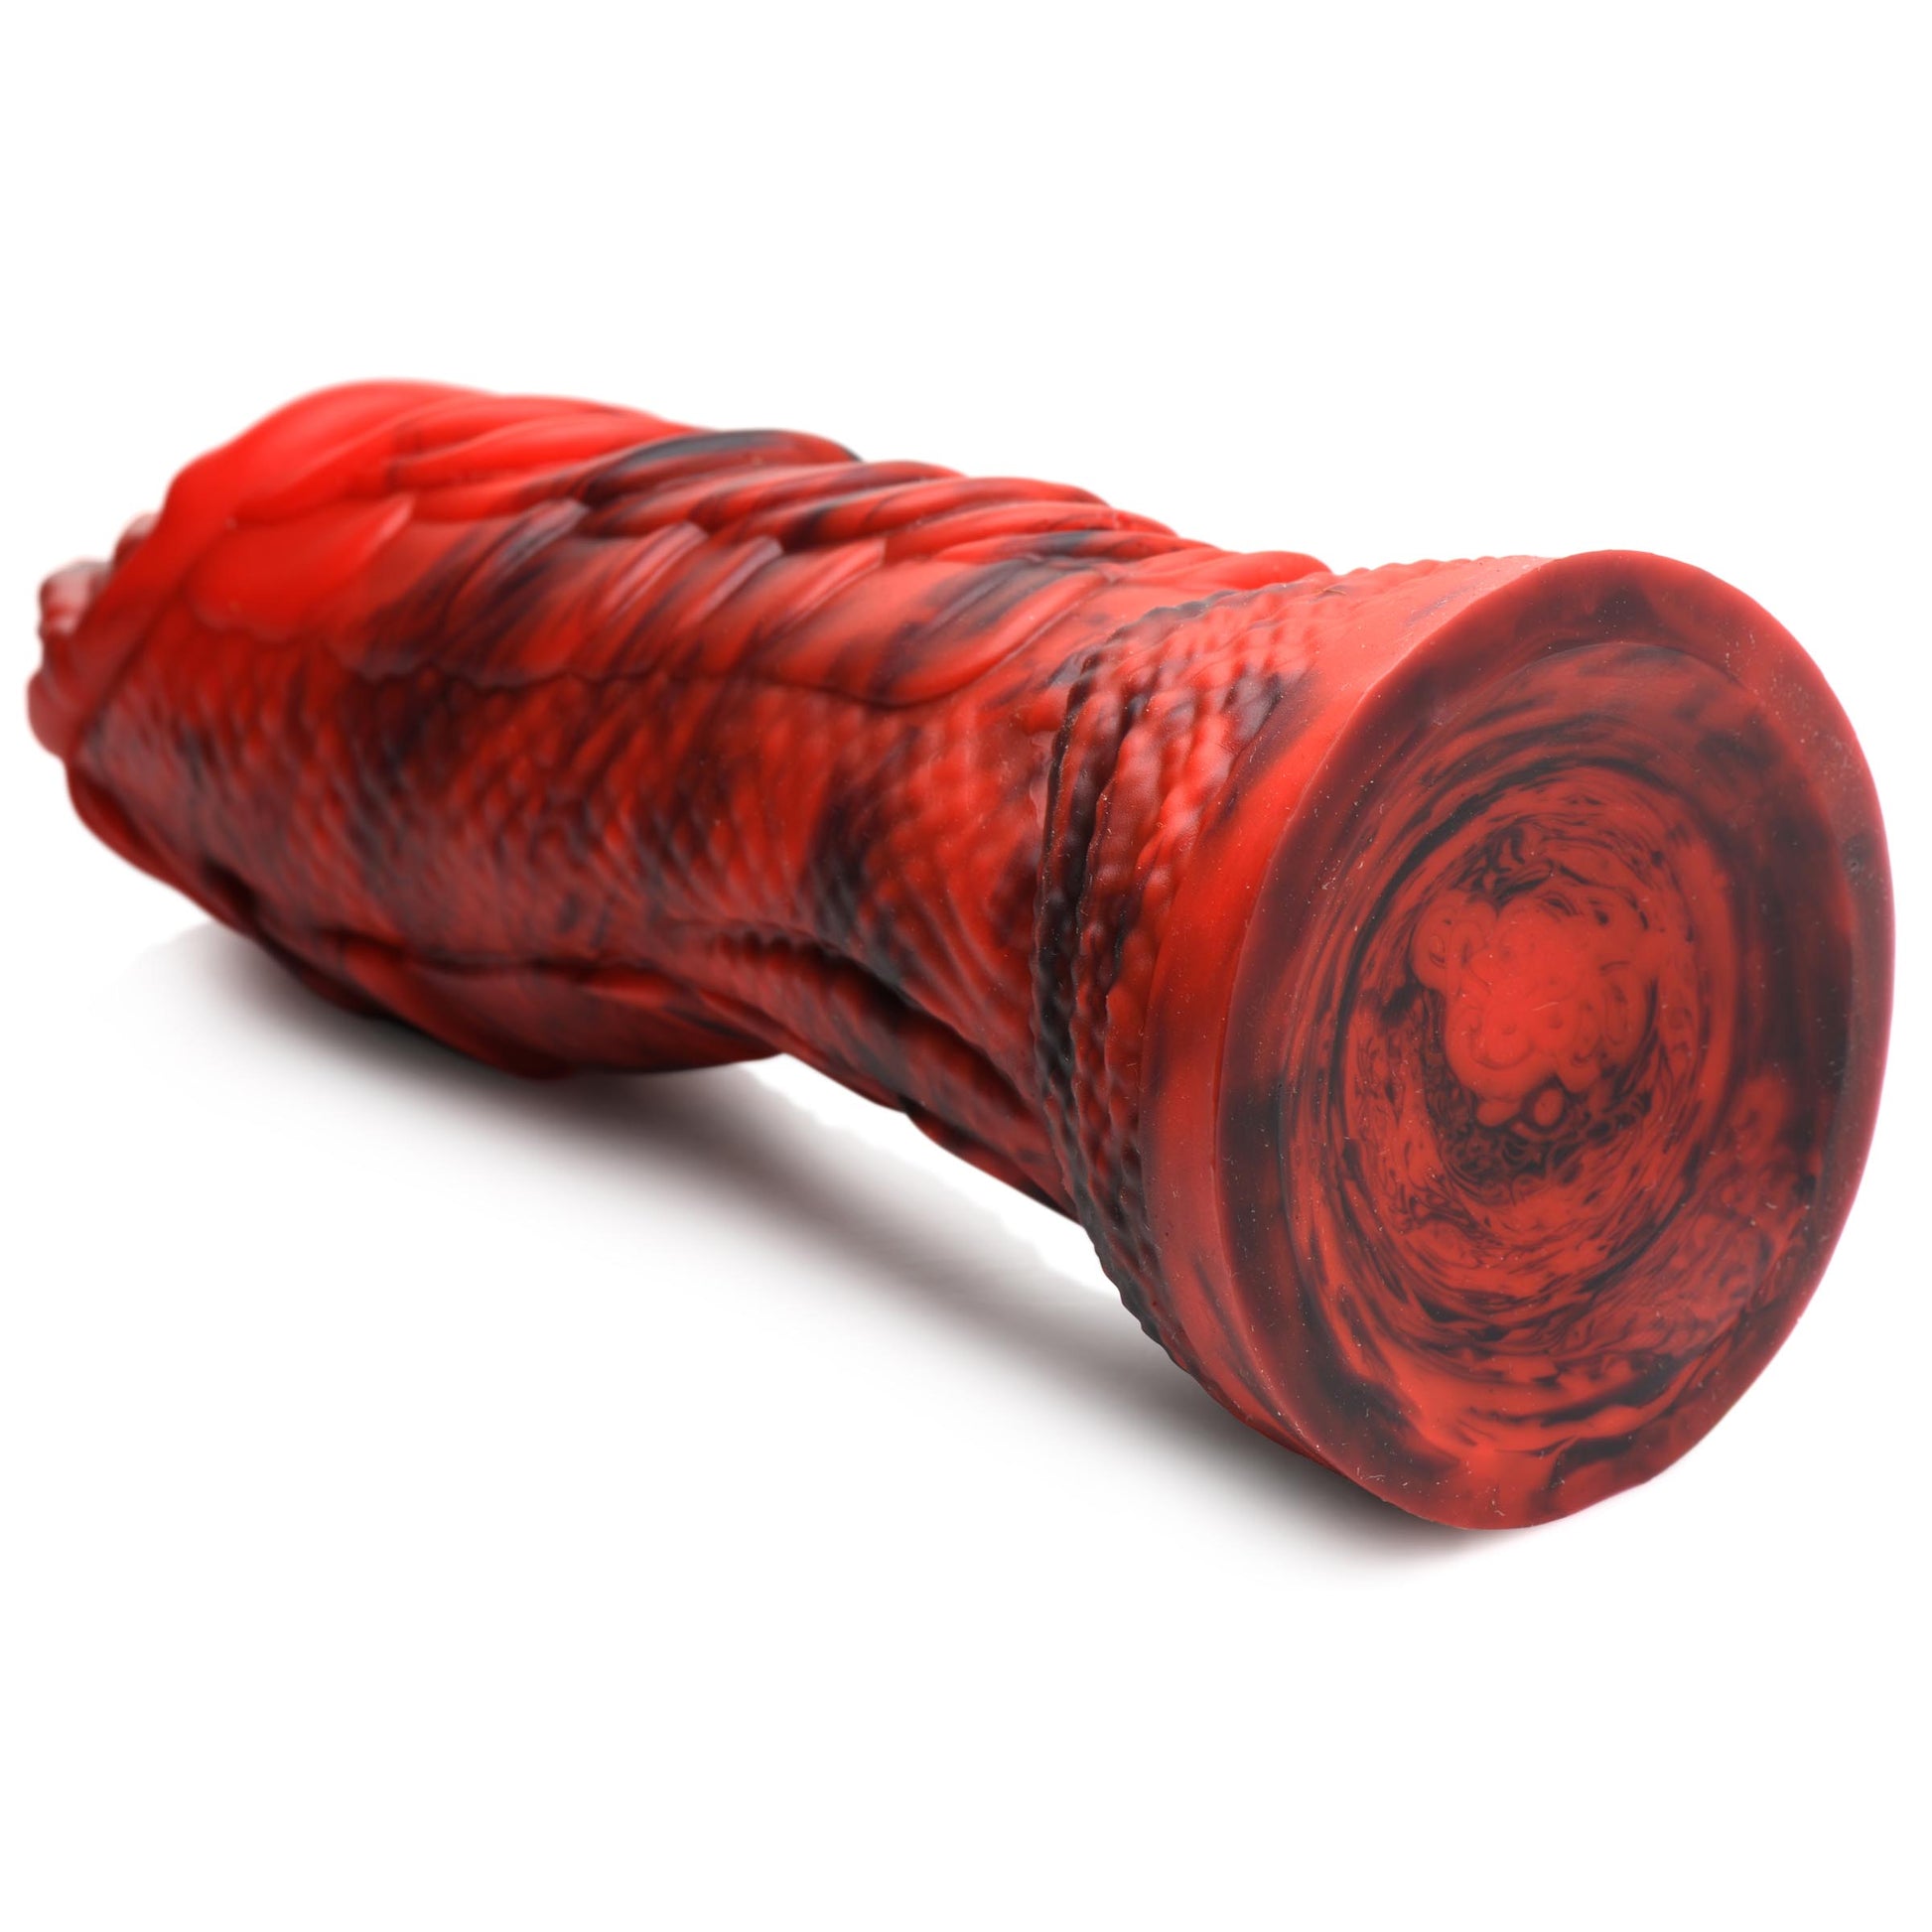 Fire Dragon Red Scaly Silicone Dildo - UABDSM